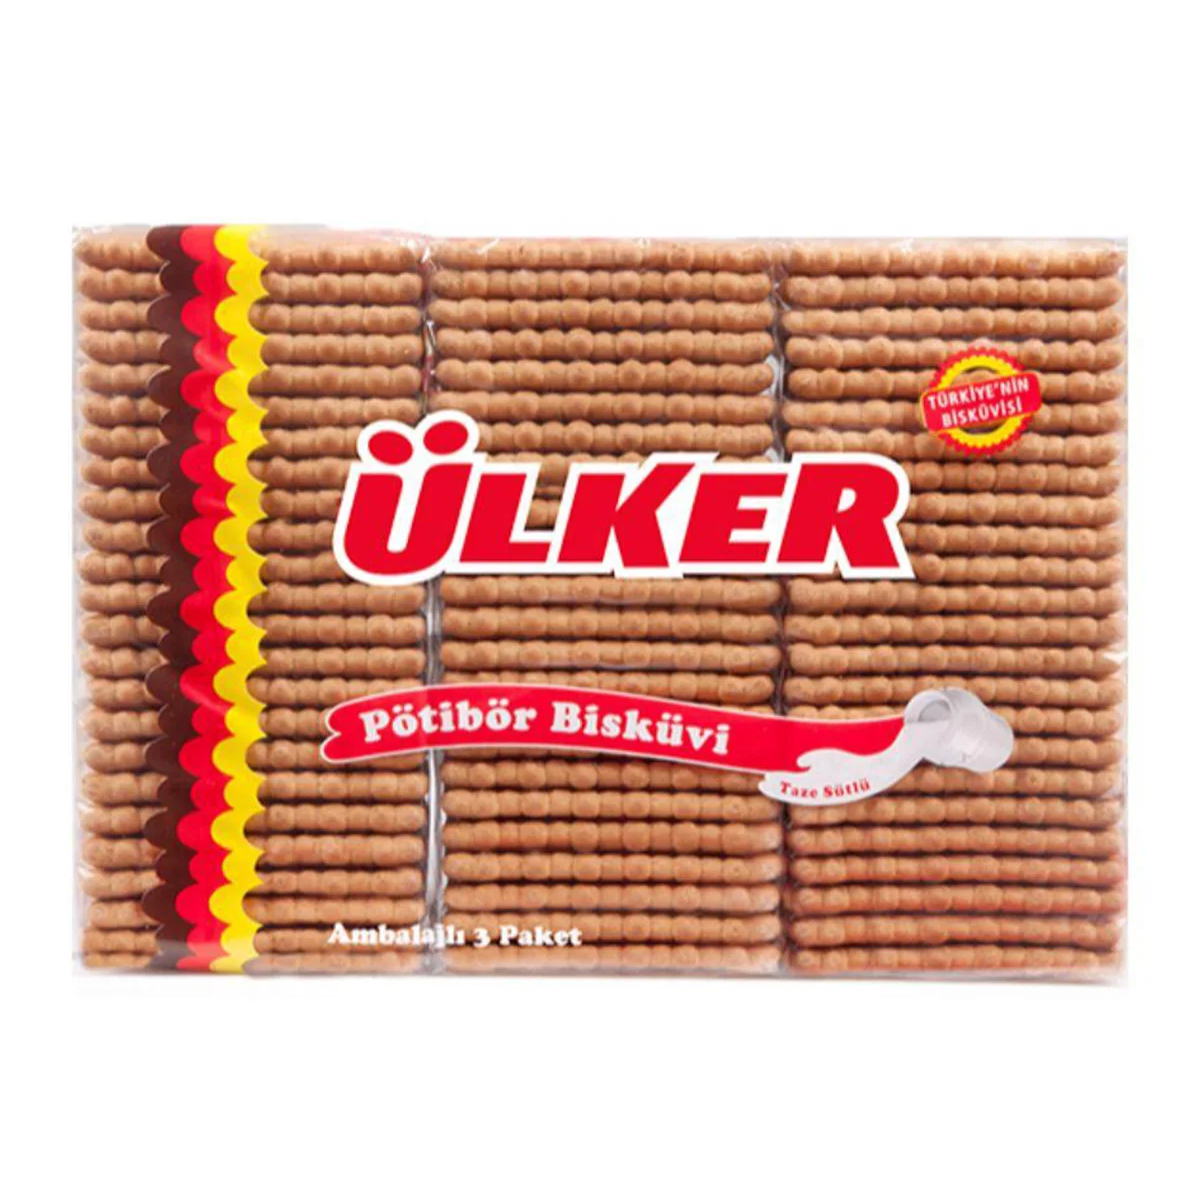 Печенье Ulker Petit Beurre, 450 г печенье ulker petit beurre с шоколадом 175 г